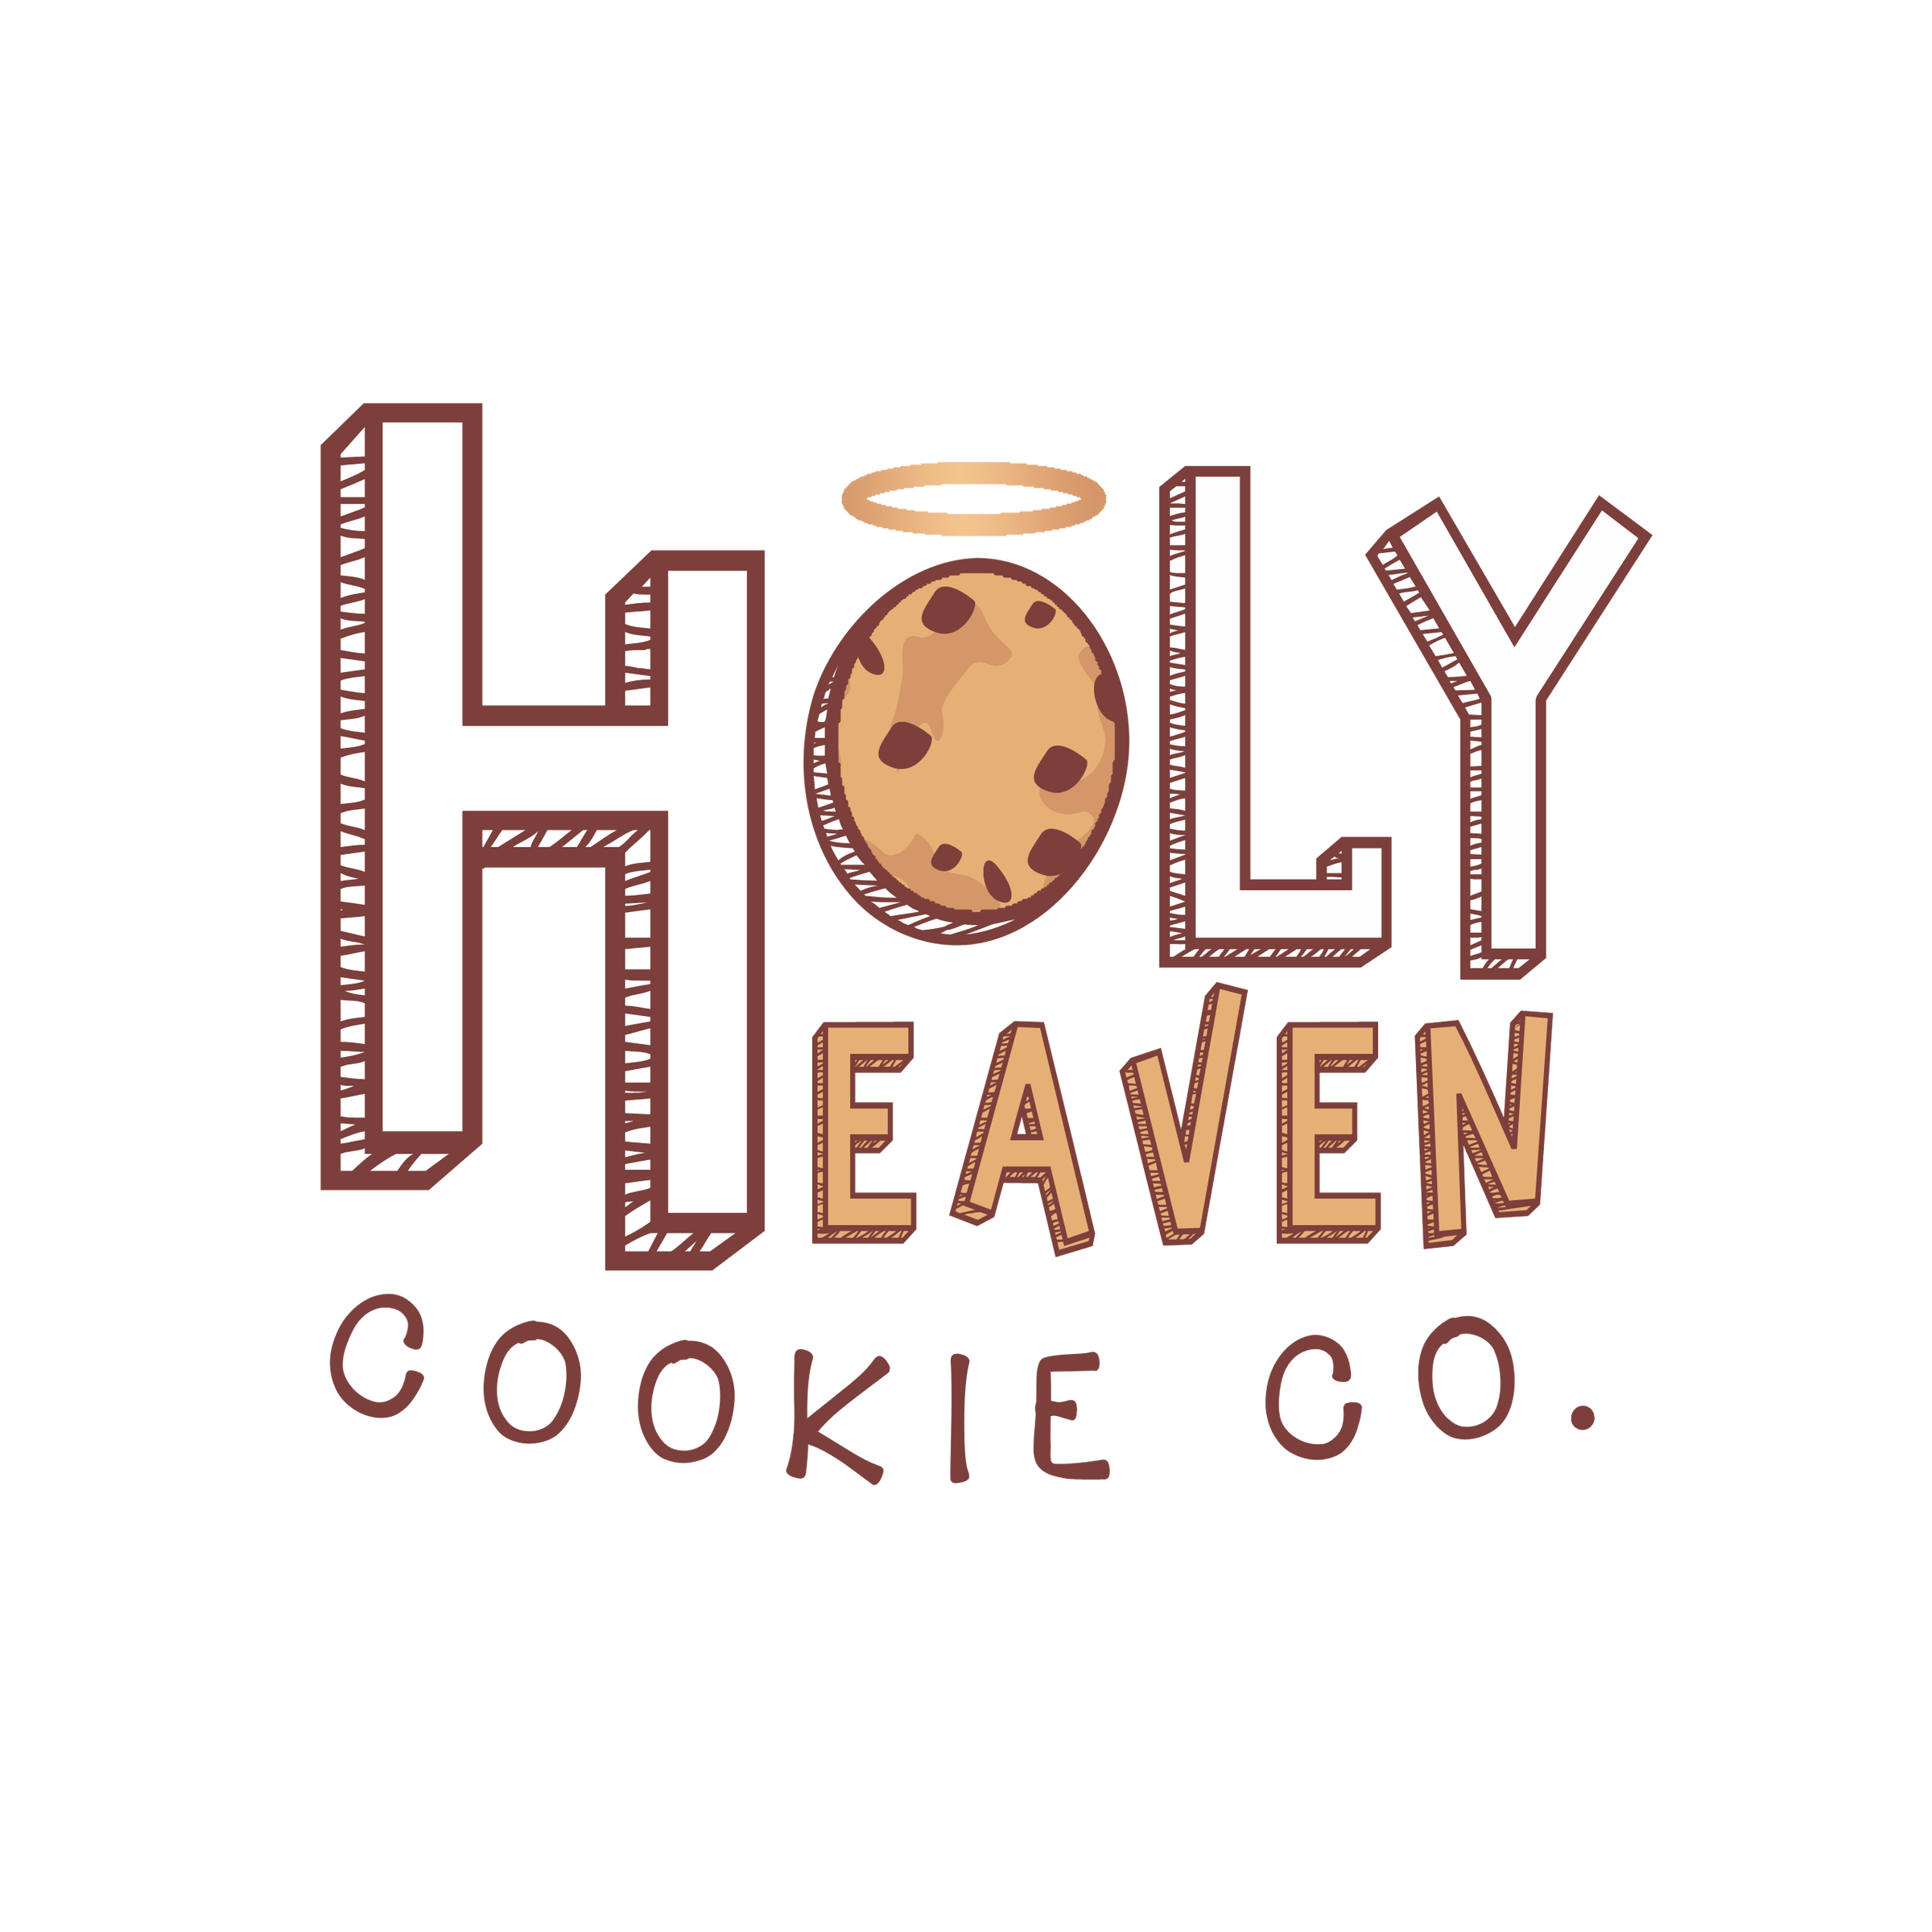 cookie company logo